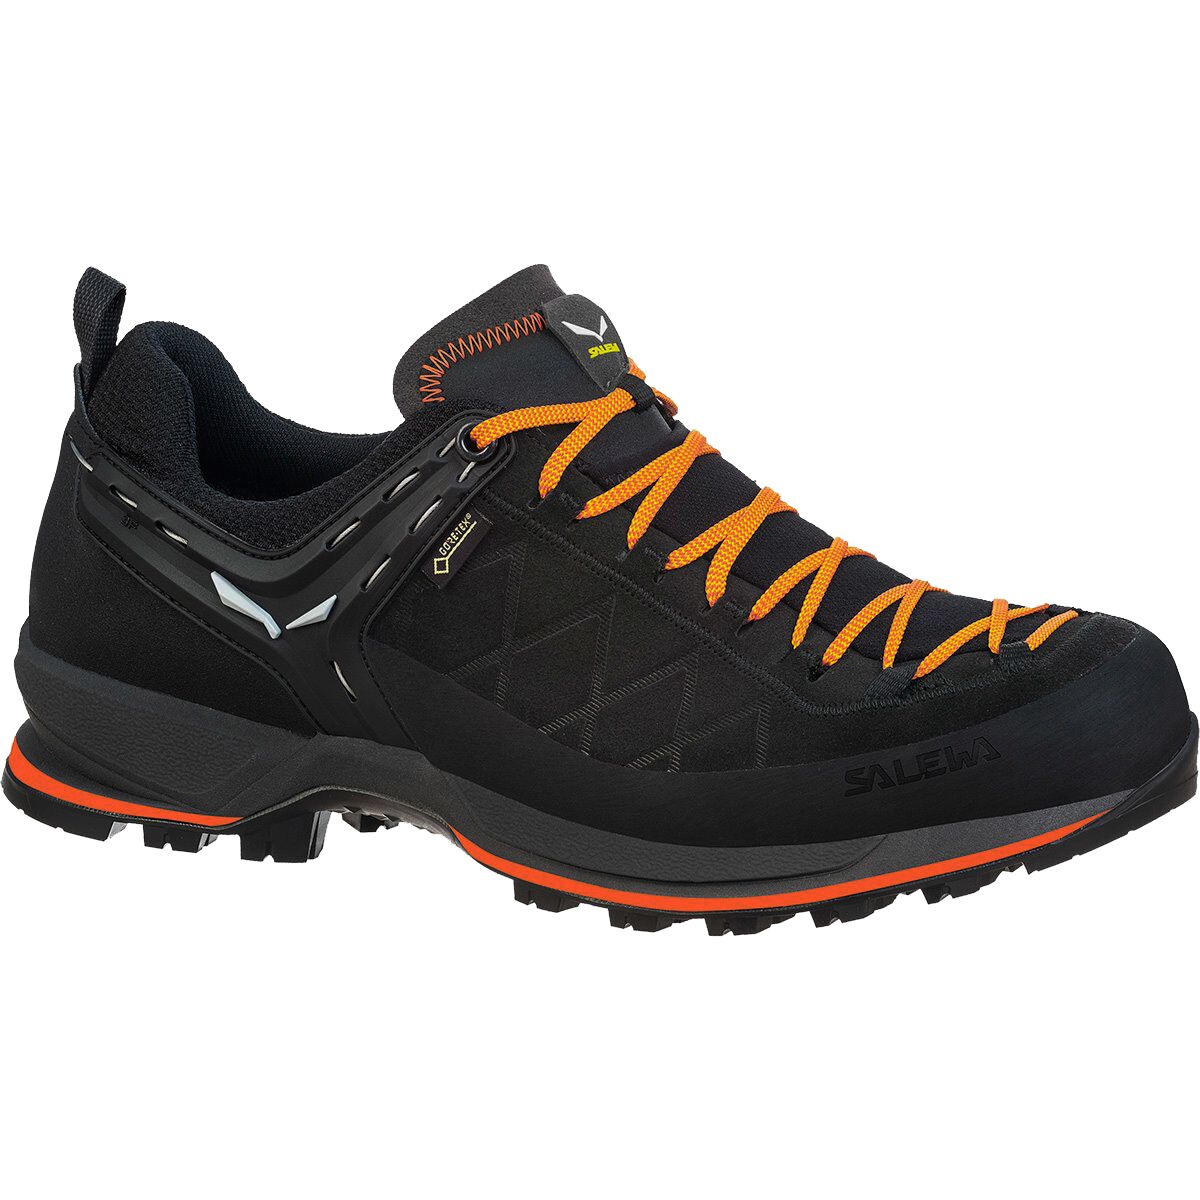 Salewa Mountain Trainer 2 GTX Hiking Shoe - Men's